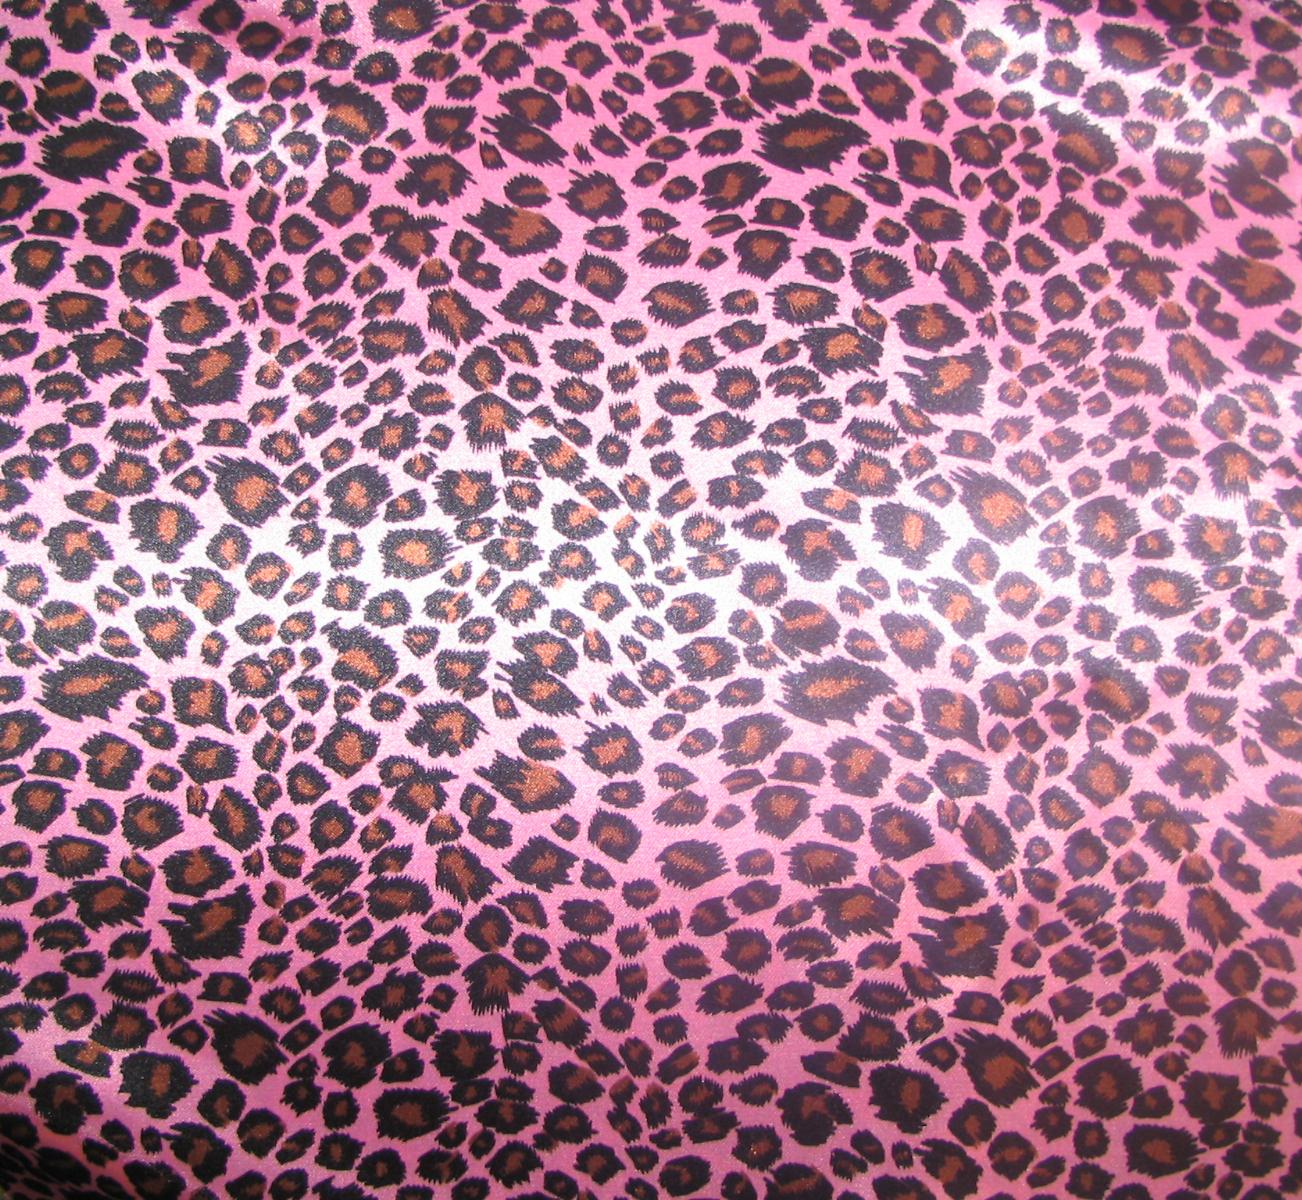 𝚌𝚑𝚎𝚎𝚝𝚊𝚑 𝚙𝚒𝚗𝚔 𝚟𝚎𝚛𝚜𝚒𝚘𝚗   Cheetah print wallpaper  Wallpaper iphone cute Cute patterns wallpaper